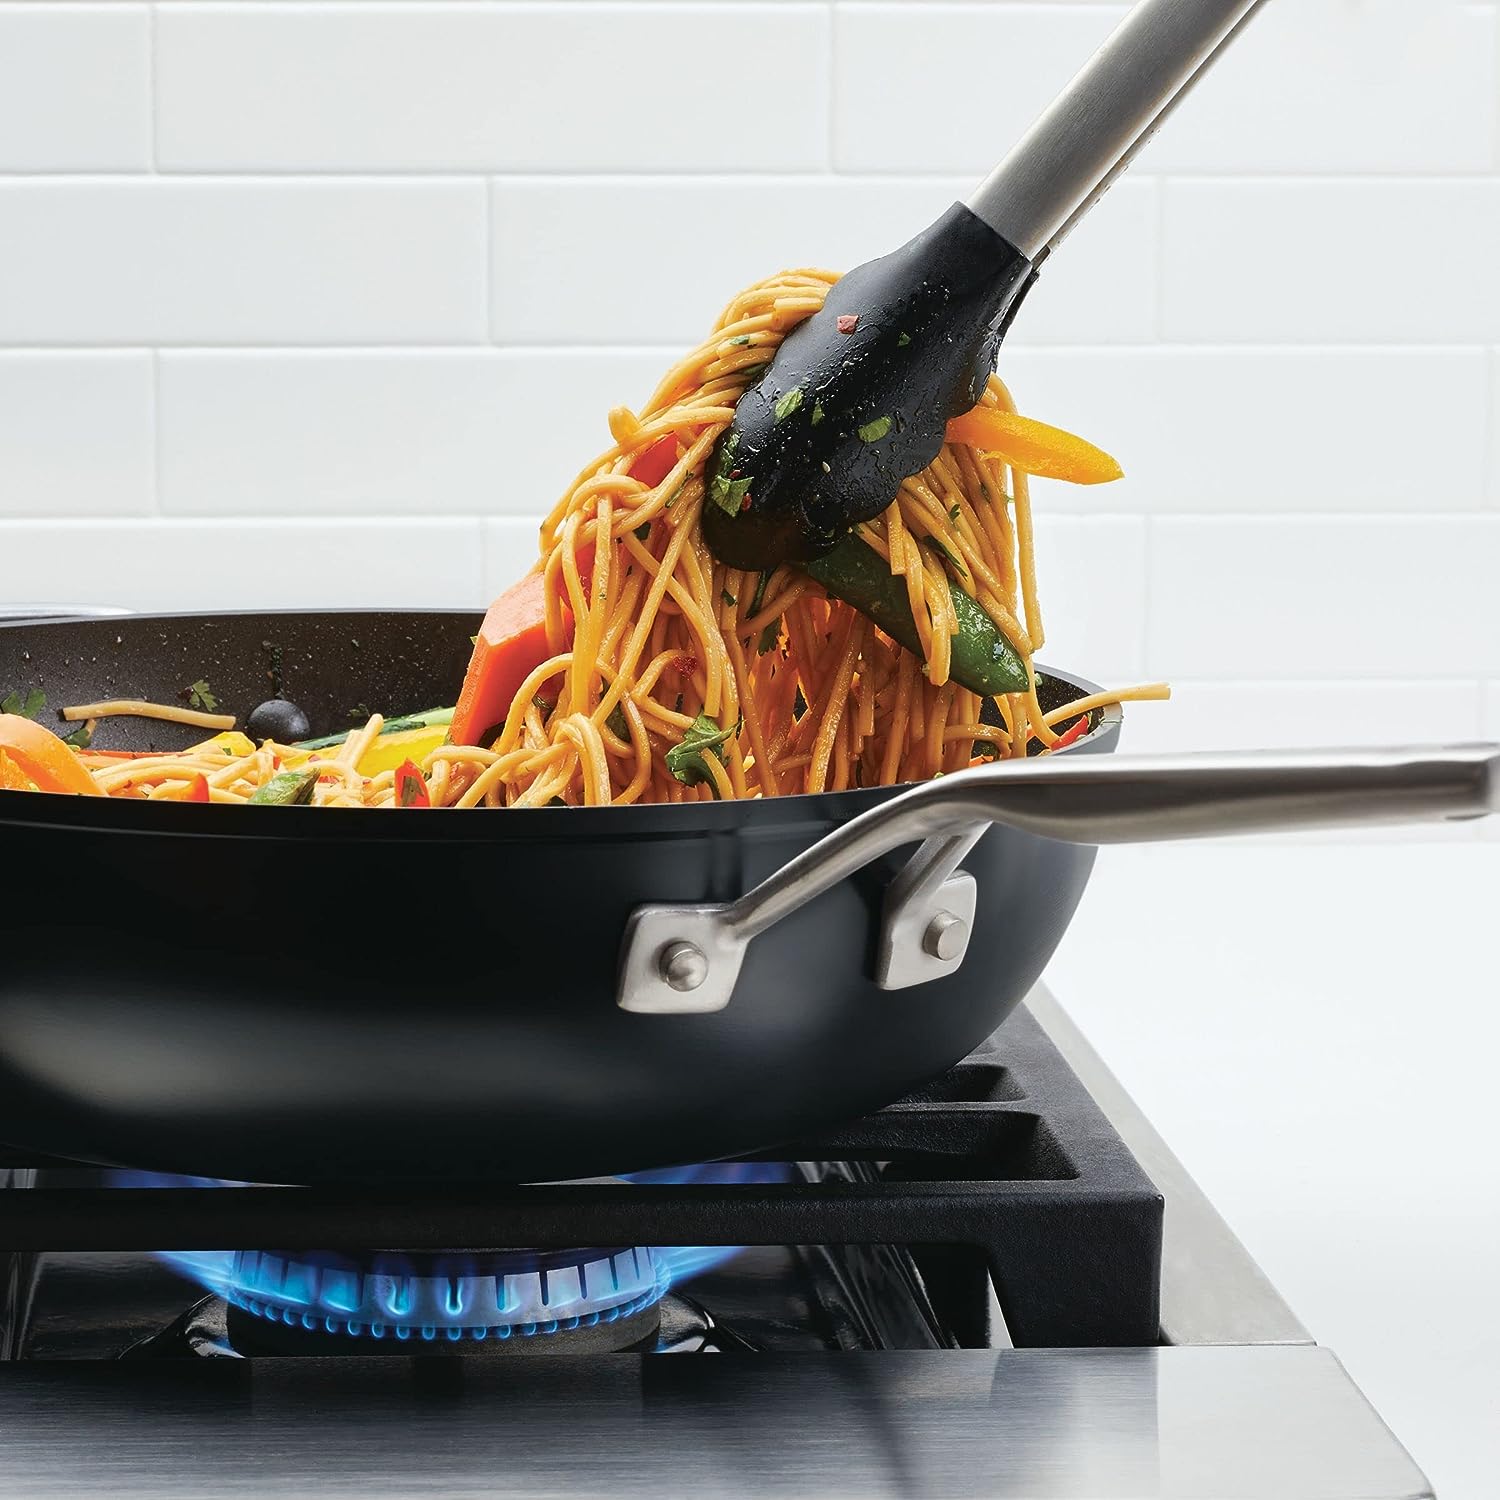 KitchenAid 12.25 Hard-Anodized Aluminum Non-Stick Frying Pan with